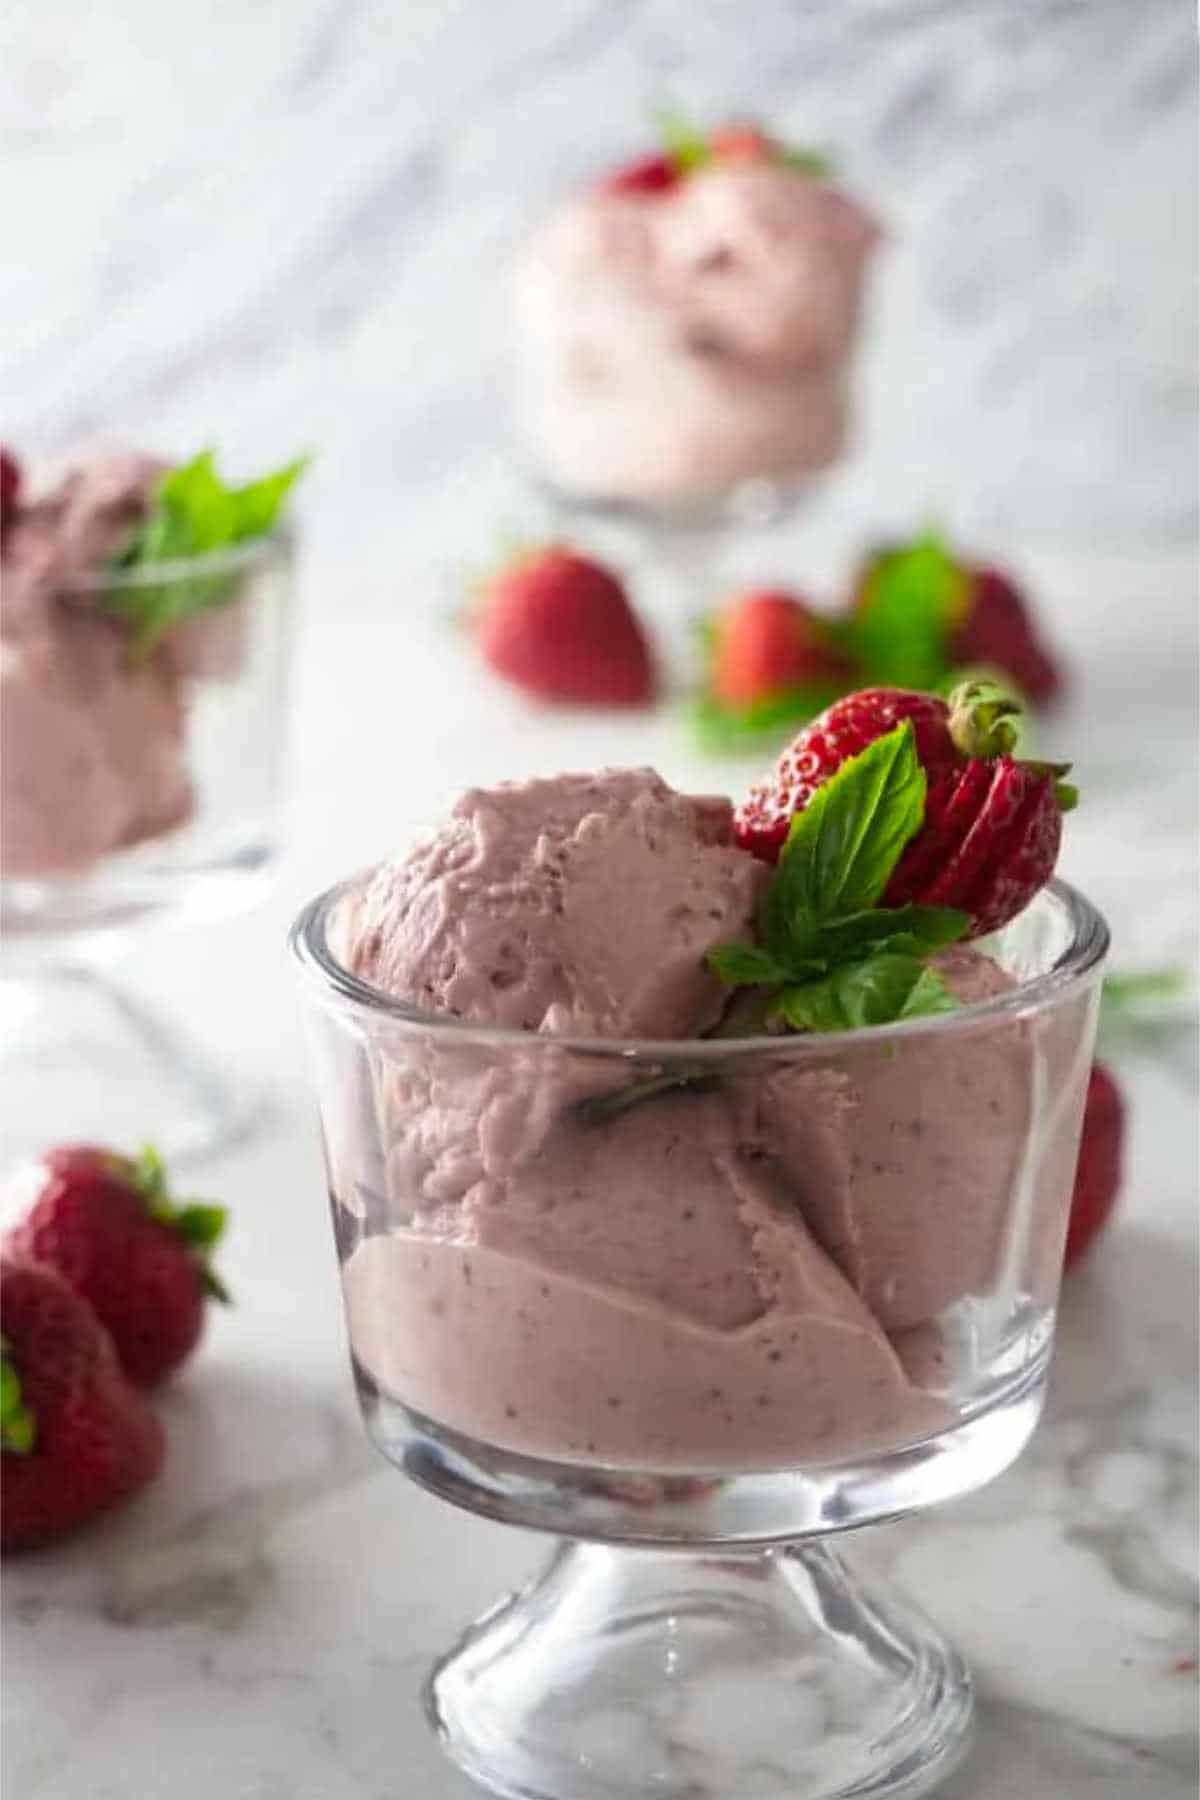 strawberry desserts goat cheese and strawberries ice cream.